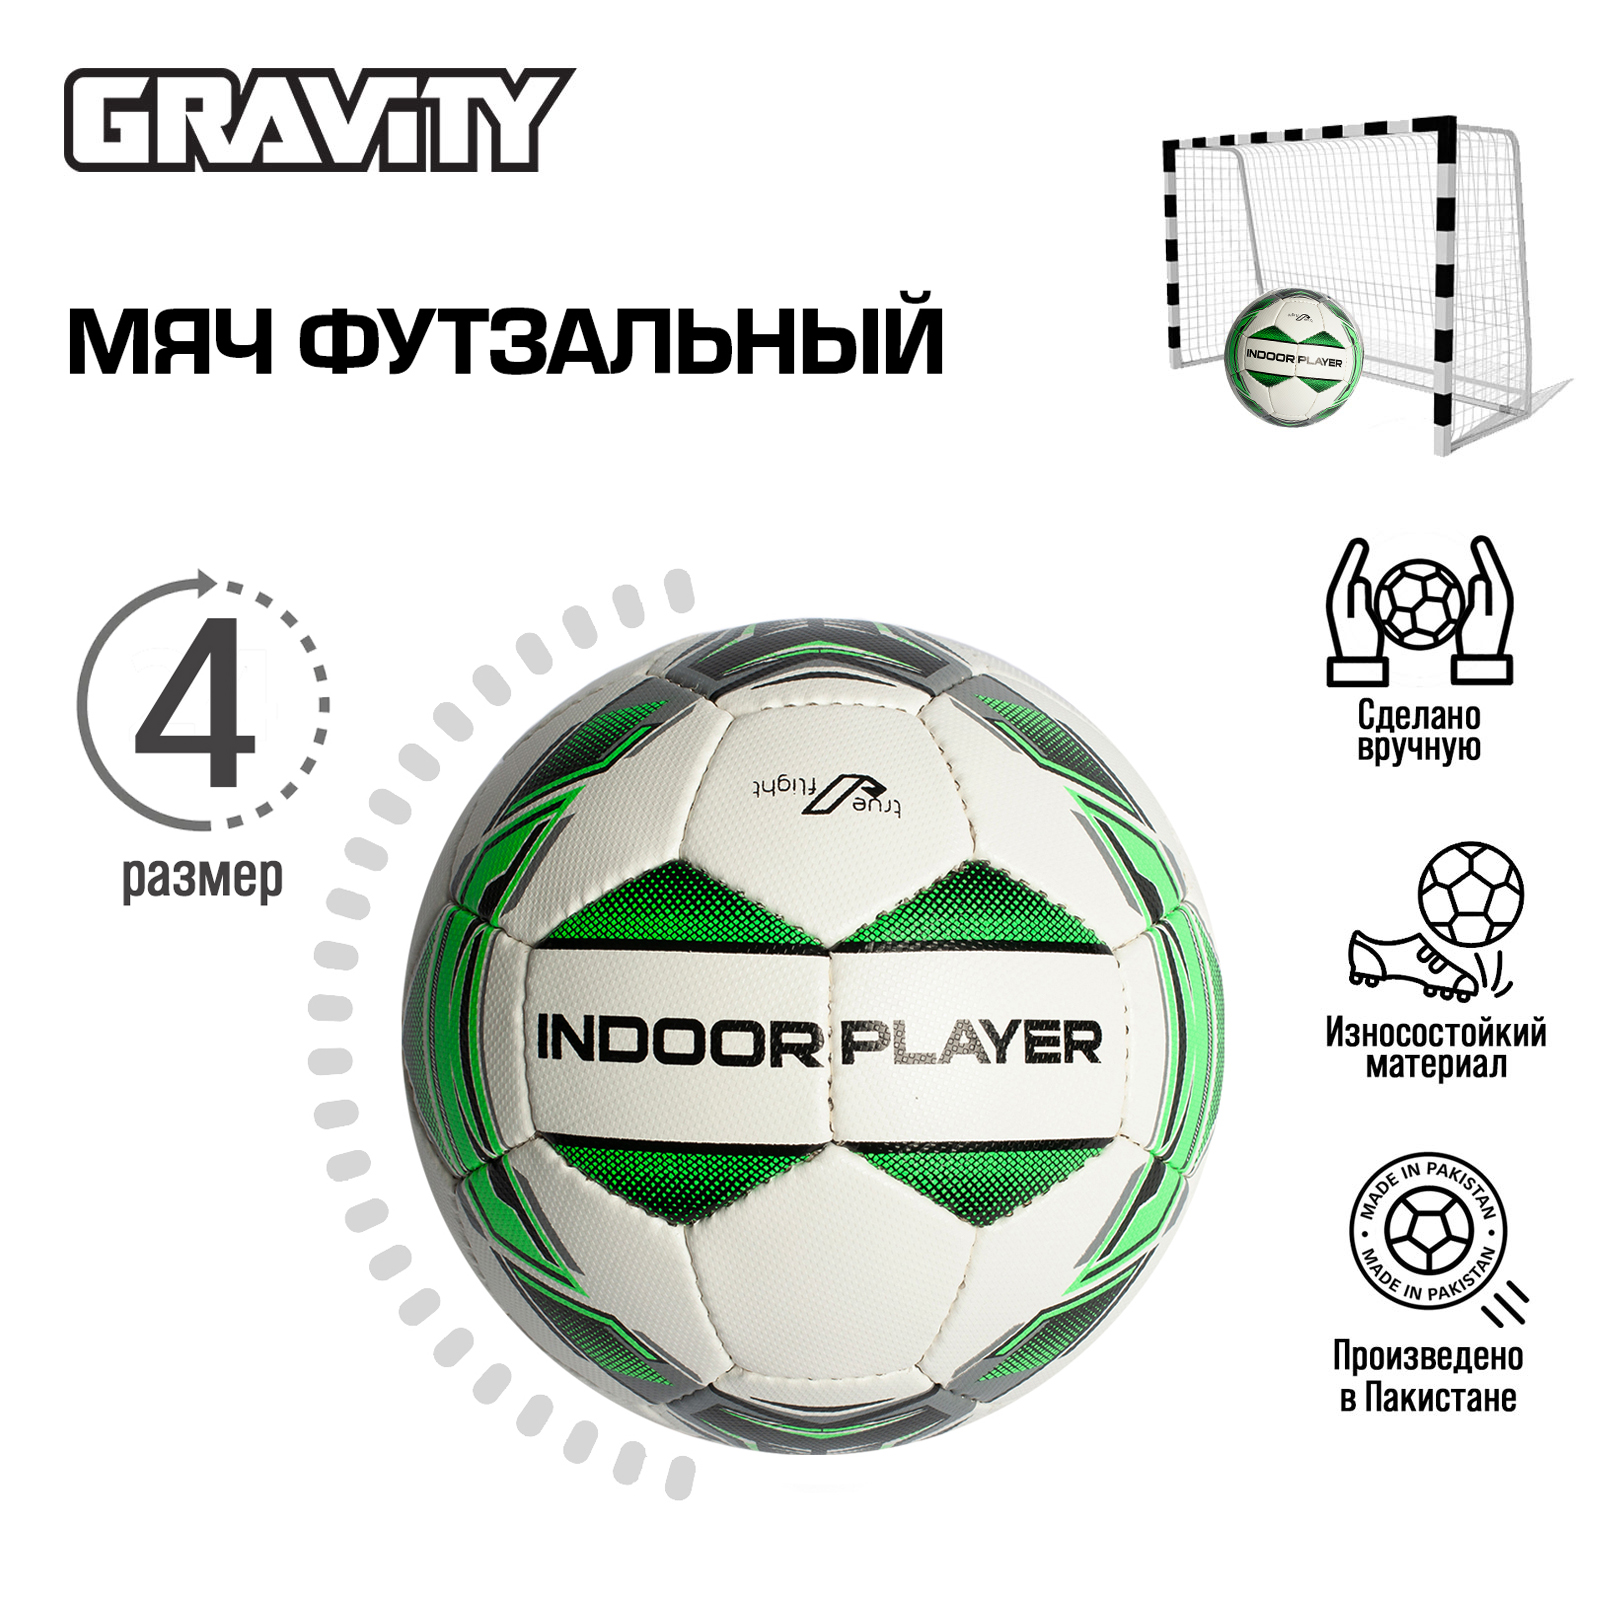 Футзальный мяч Gravity, ручная сшивка, INDOOR PLAYER, размер 4